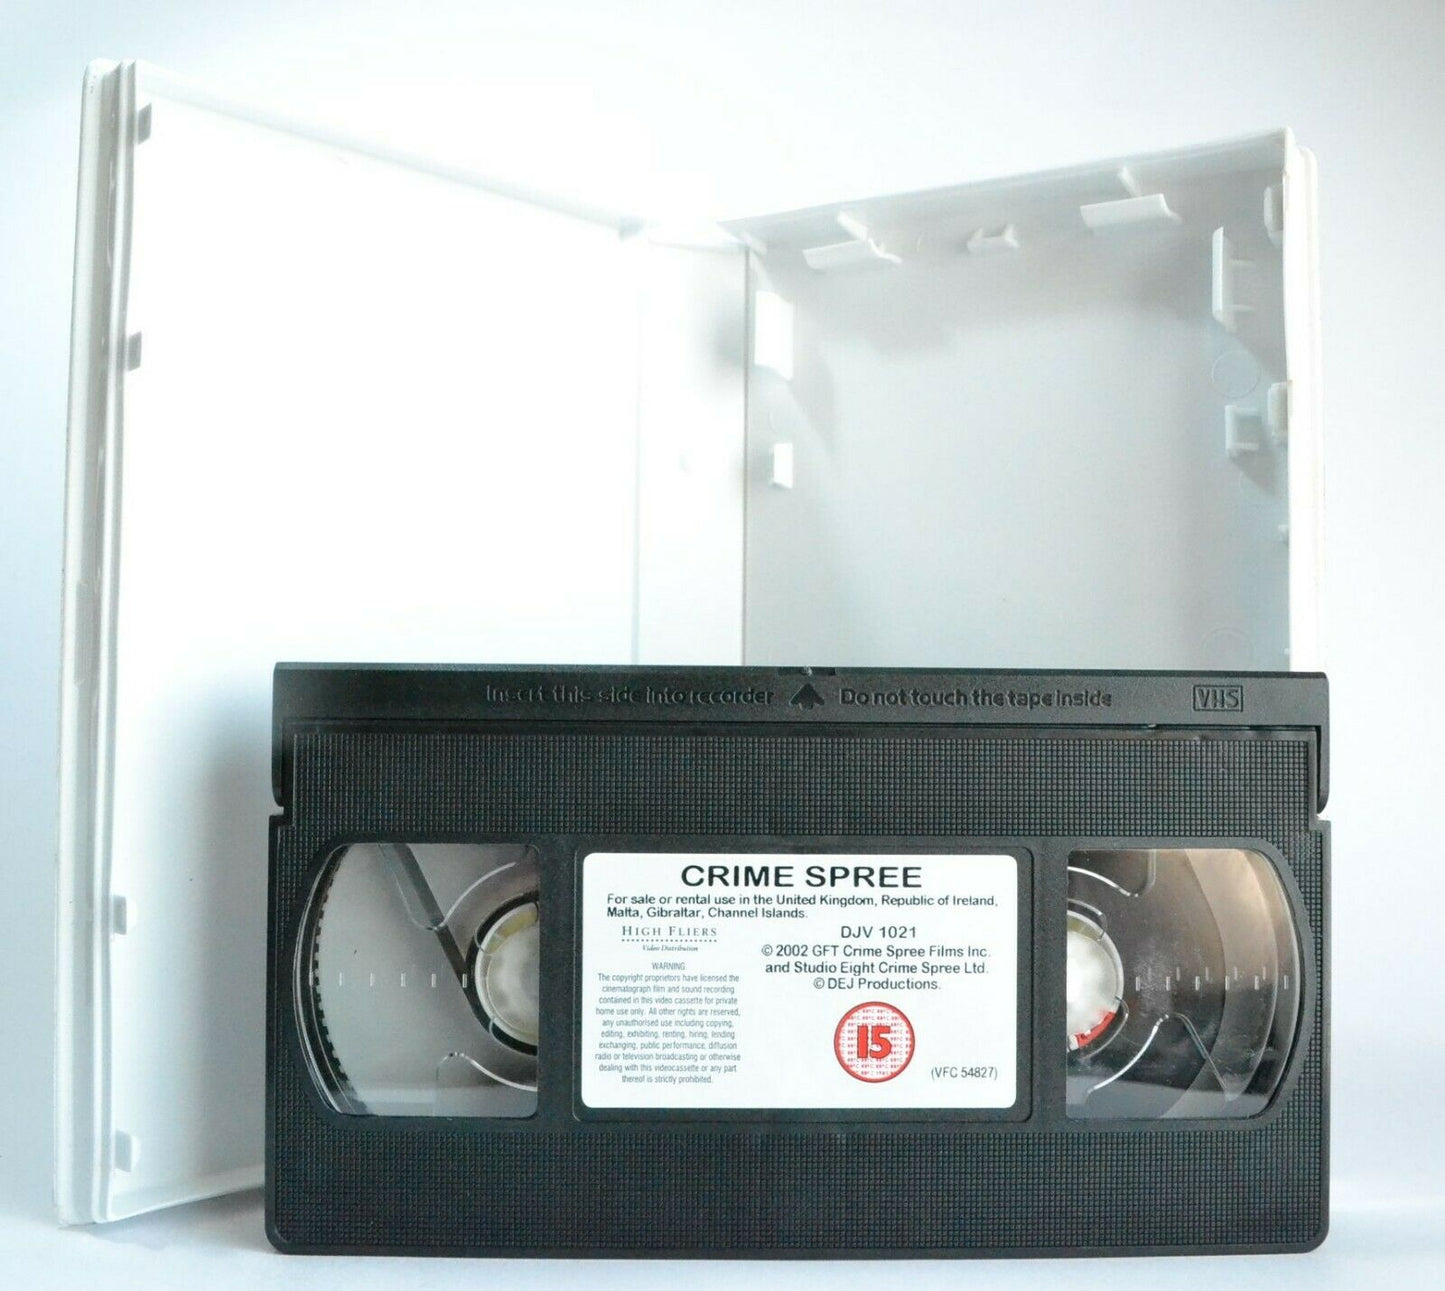 Crime Spree (2003): Canadian/British Crime Comedy - G.Depardieu/H.Keitel - VHS-